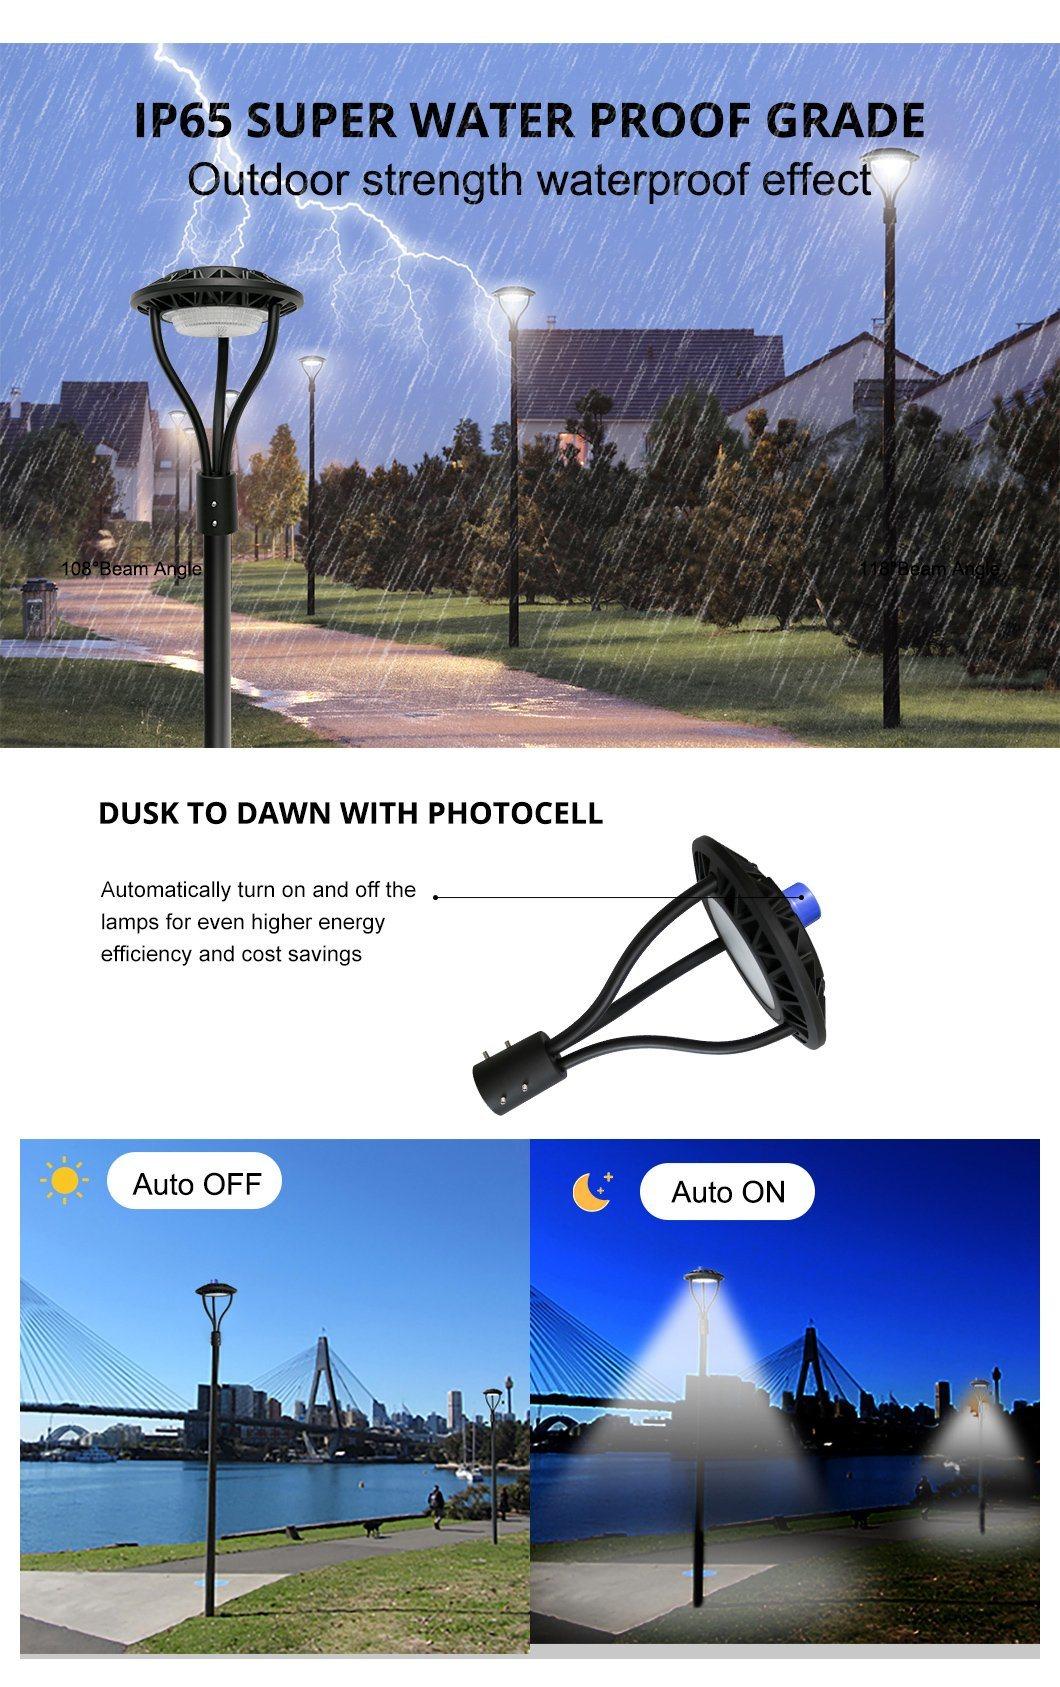 Competitive Price Motion Sensor Dimmable IP65 Waterproof Outdoor Garden Pole Light OEM 60mm 80mm Post Top LED Garden Lights